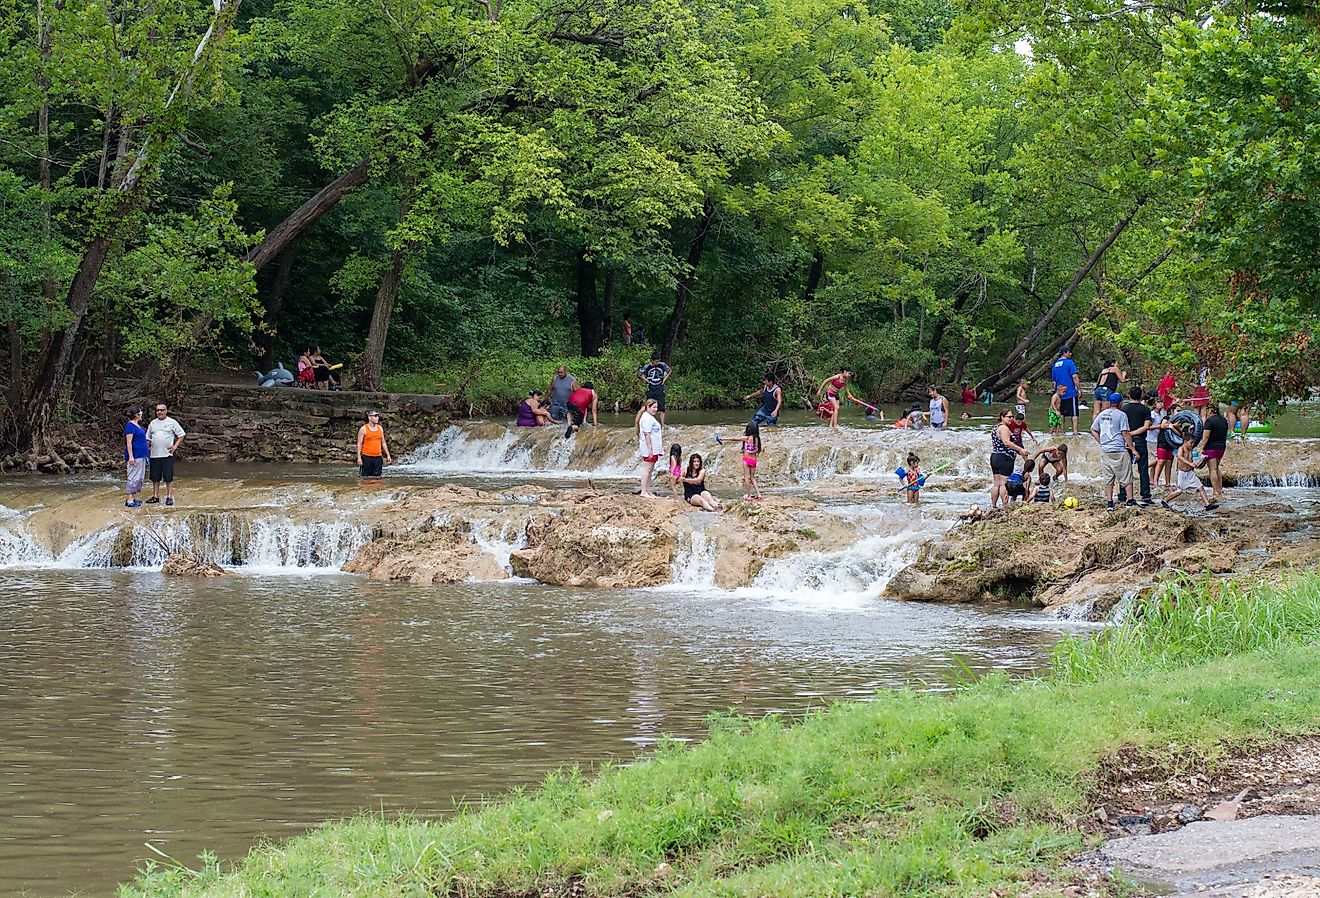 People enjoying the water at Honey Creek near Turner Falls, Oklahoma. Image credit Ivan Malechka via Shutterstock